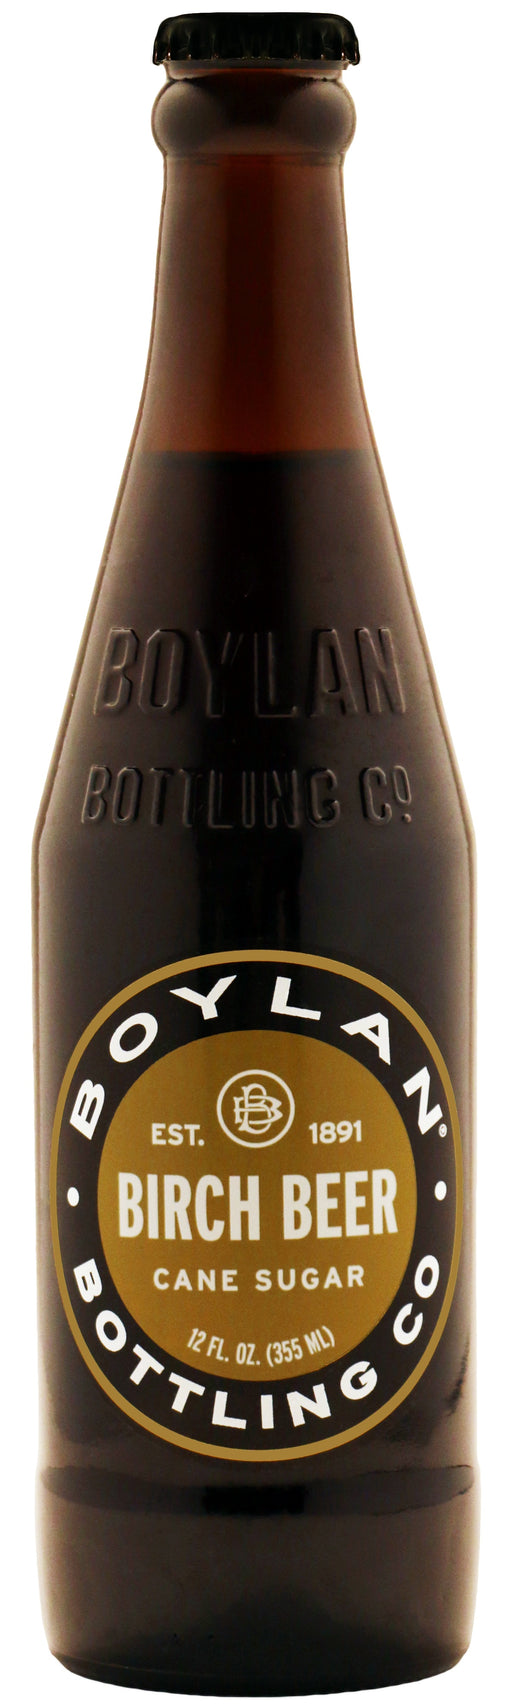 Boylan Bottleworks - Original Birch Beer, 343 ml